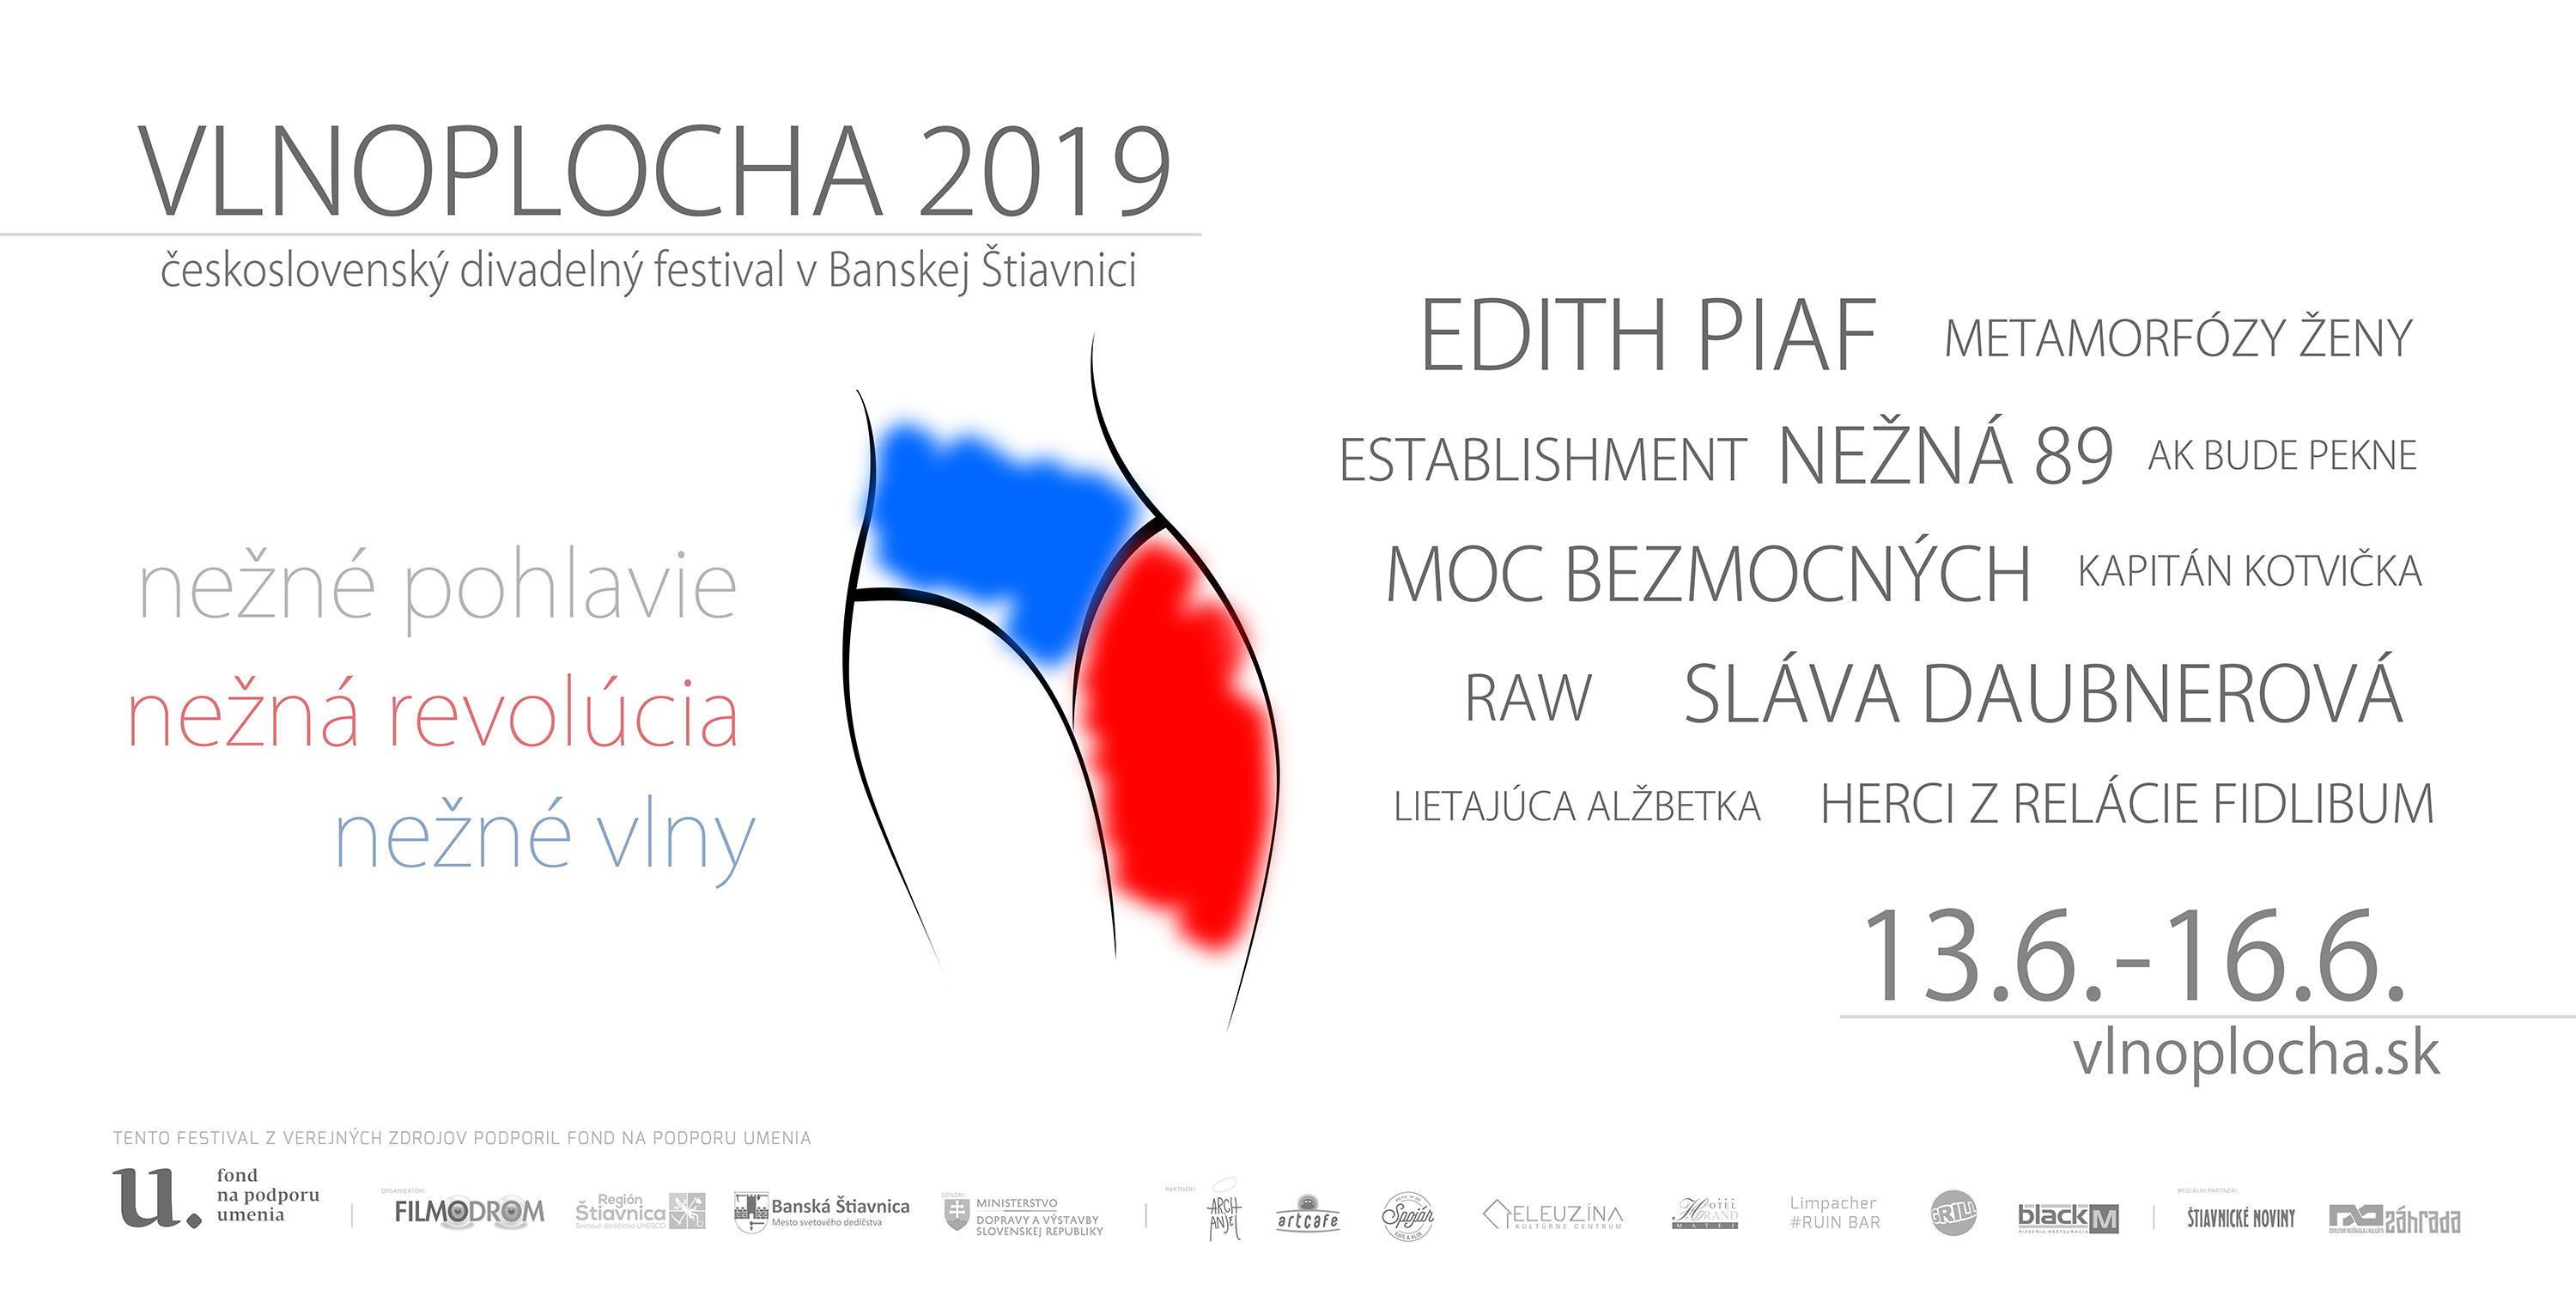 Divadeln festival VLNOPLOCHA 2019 Bansk tiavnica 